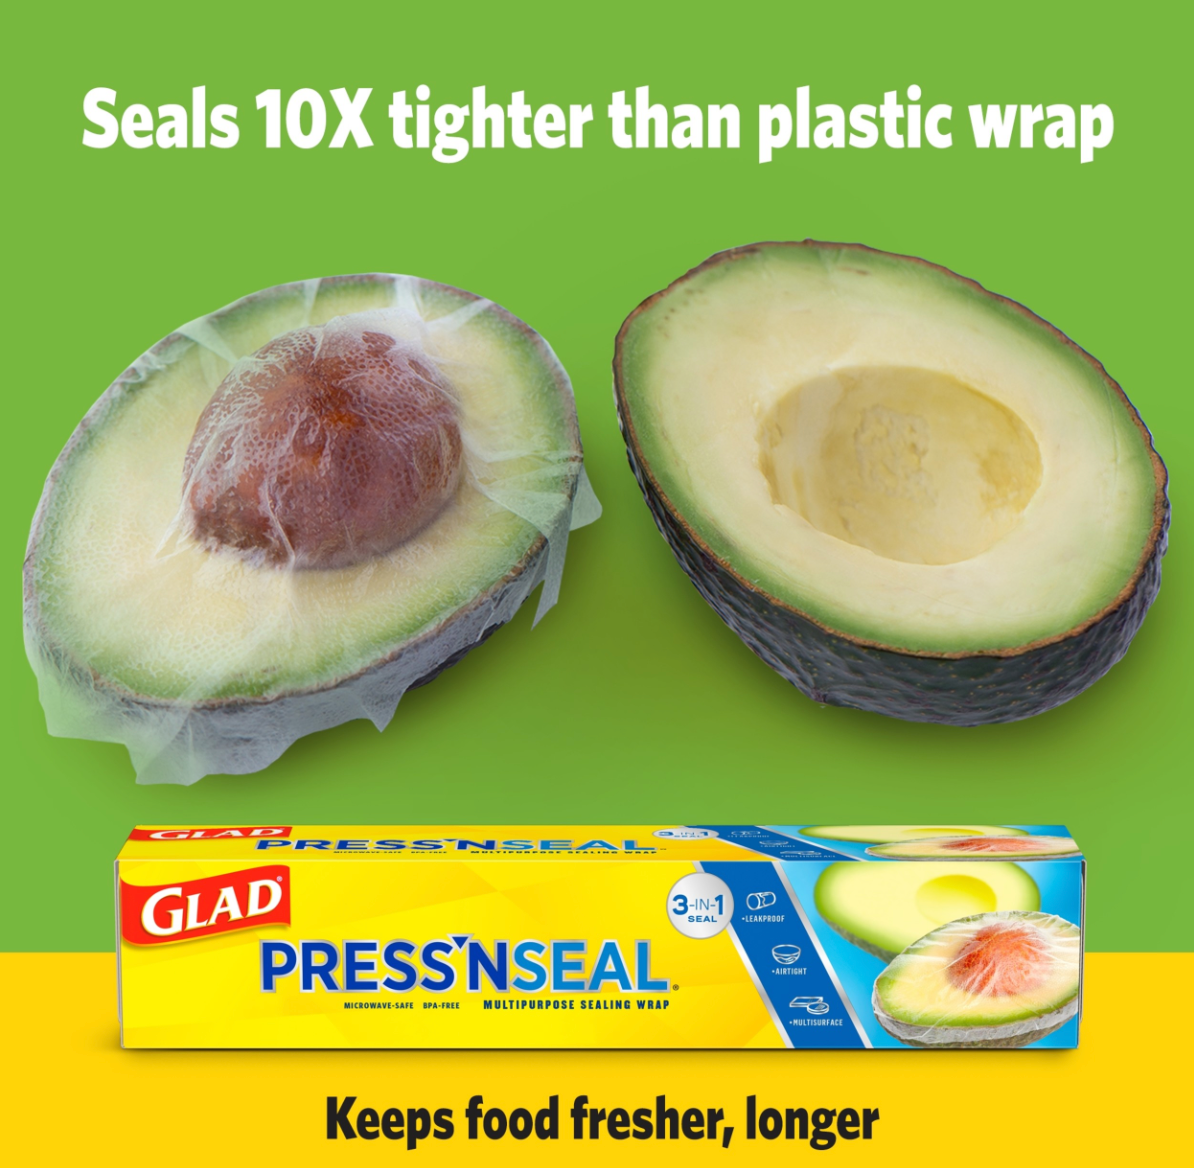 Glad Press & Seal Plastic Food Wrap – 70-Sq. Ft.